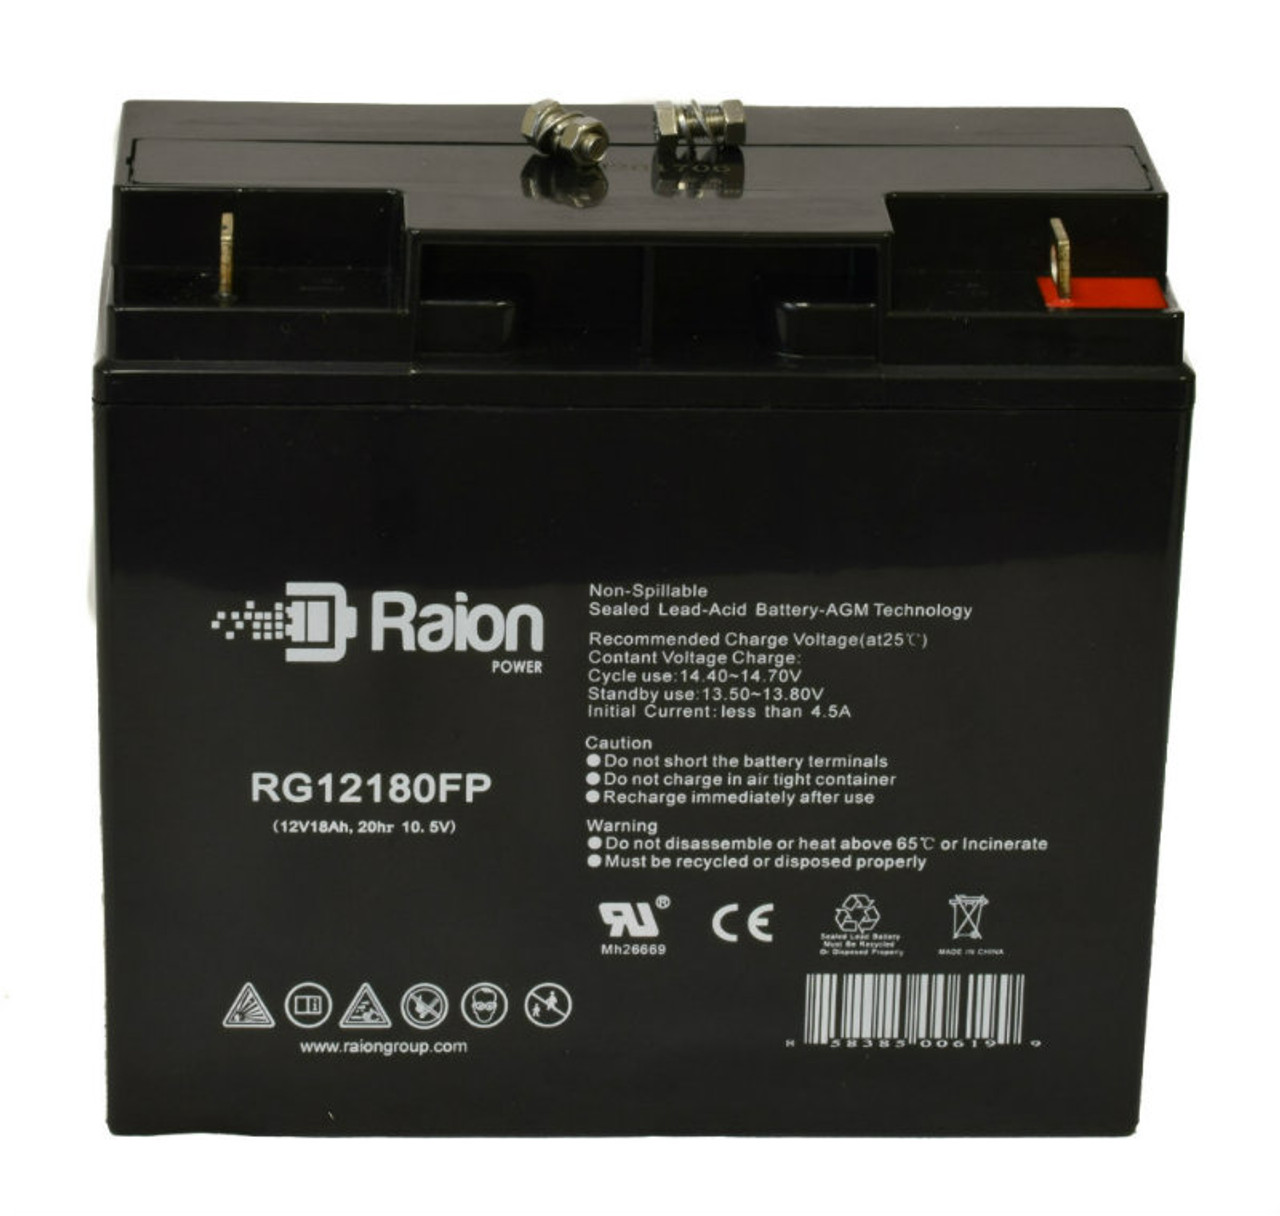 Raion Power RG12180FP 12V 18Ah Lead Acid Battery for Narco Savina XL-External